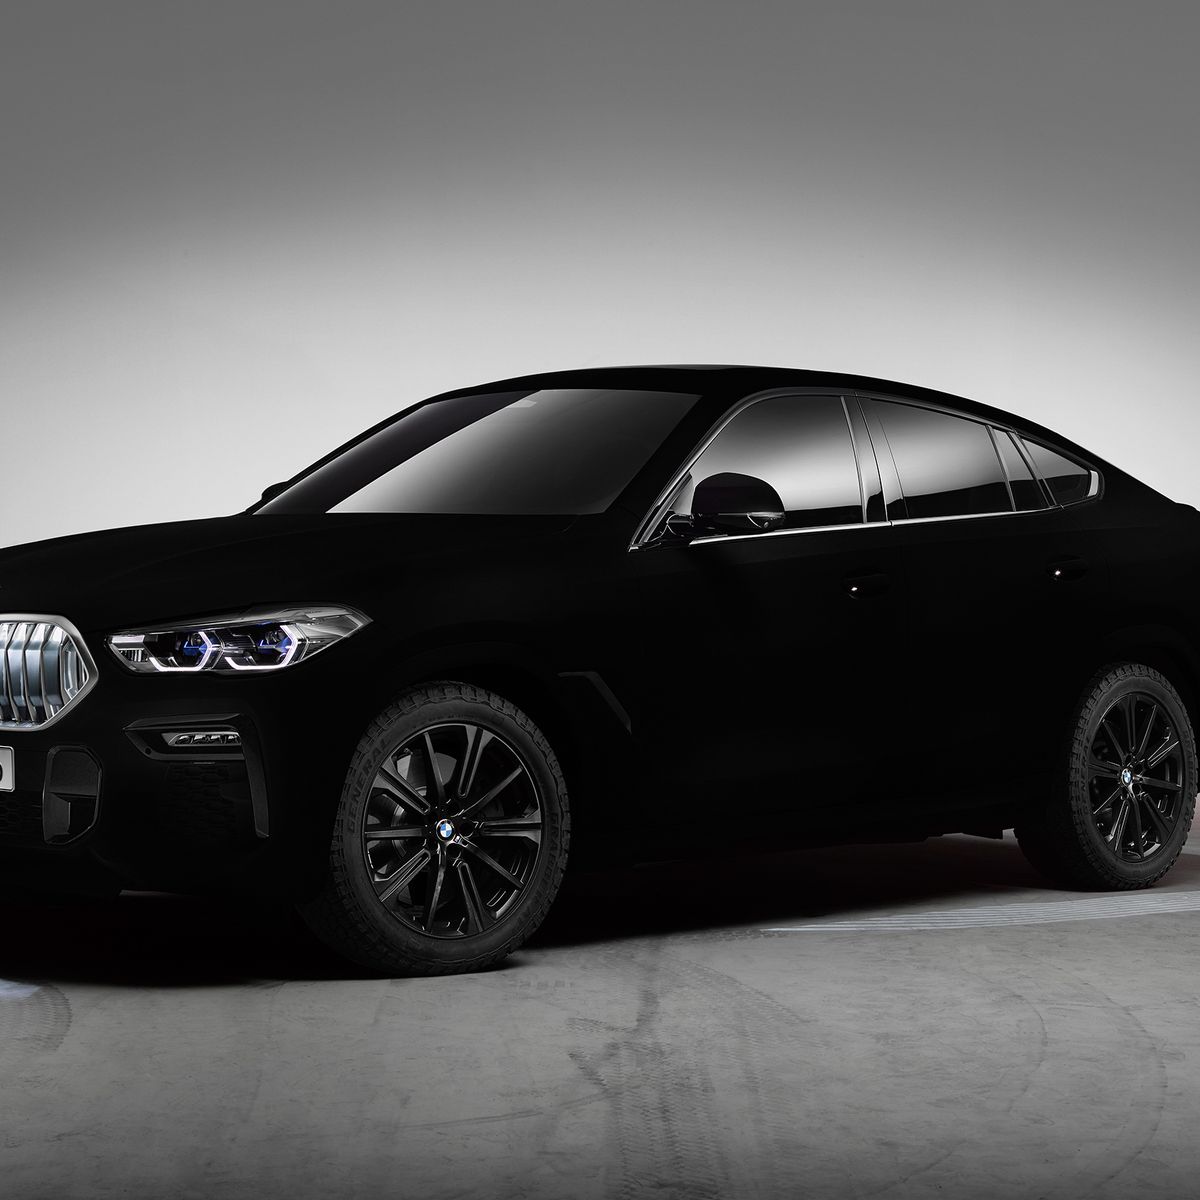 BMW shows off an X6 in Vantablack, the blackest of blacks - The Verge